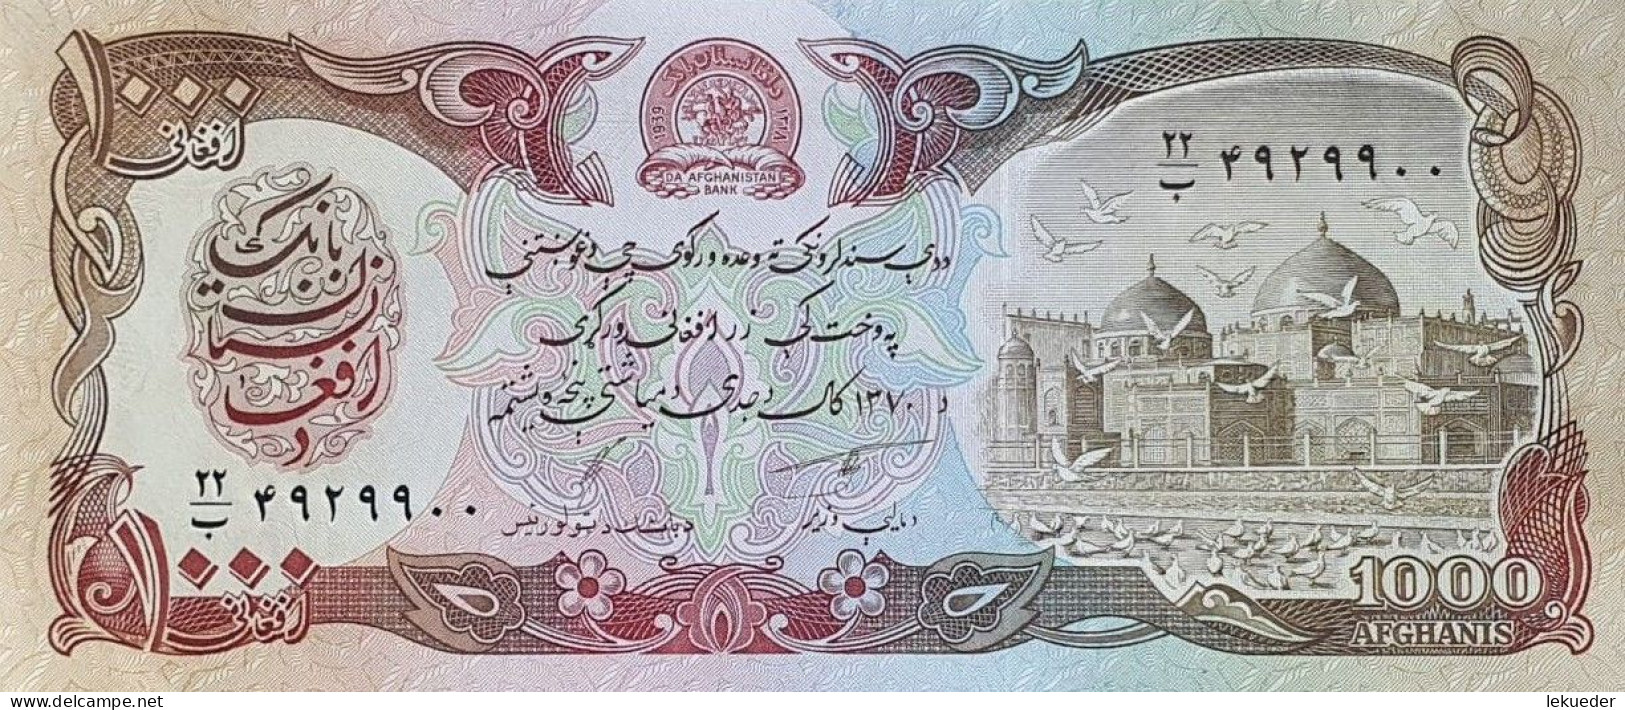 Billete De Banco De AFGANISTÁN - 1000 Afghanis, 1991  Sin Cursar - Afghanistán